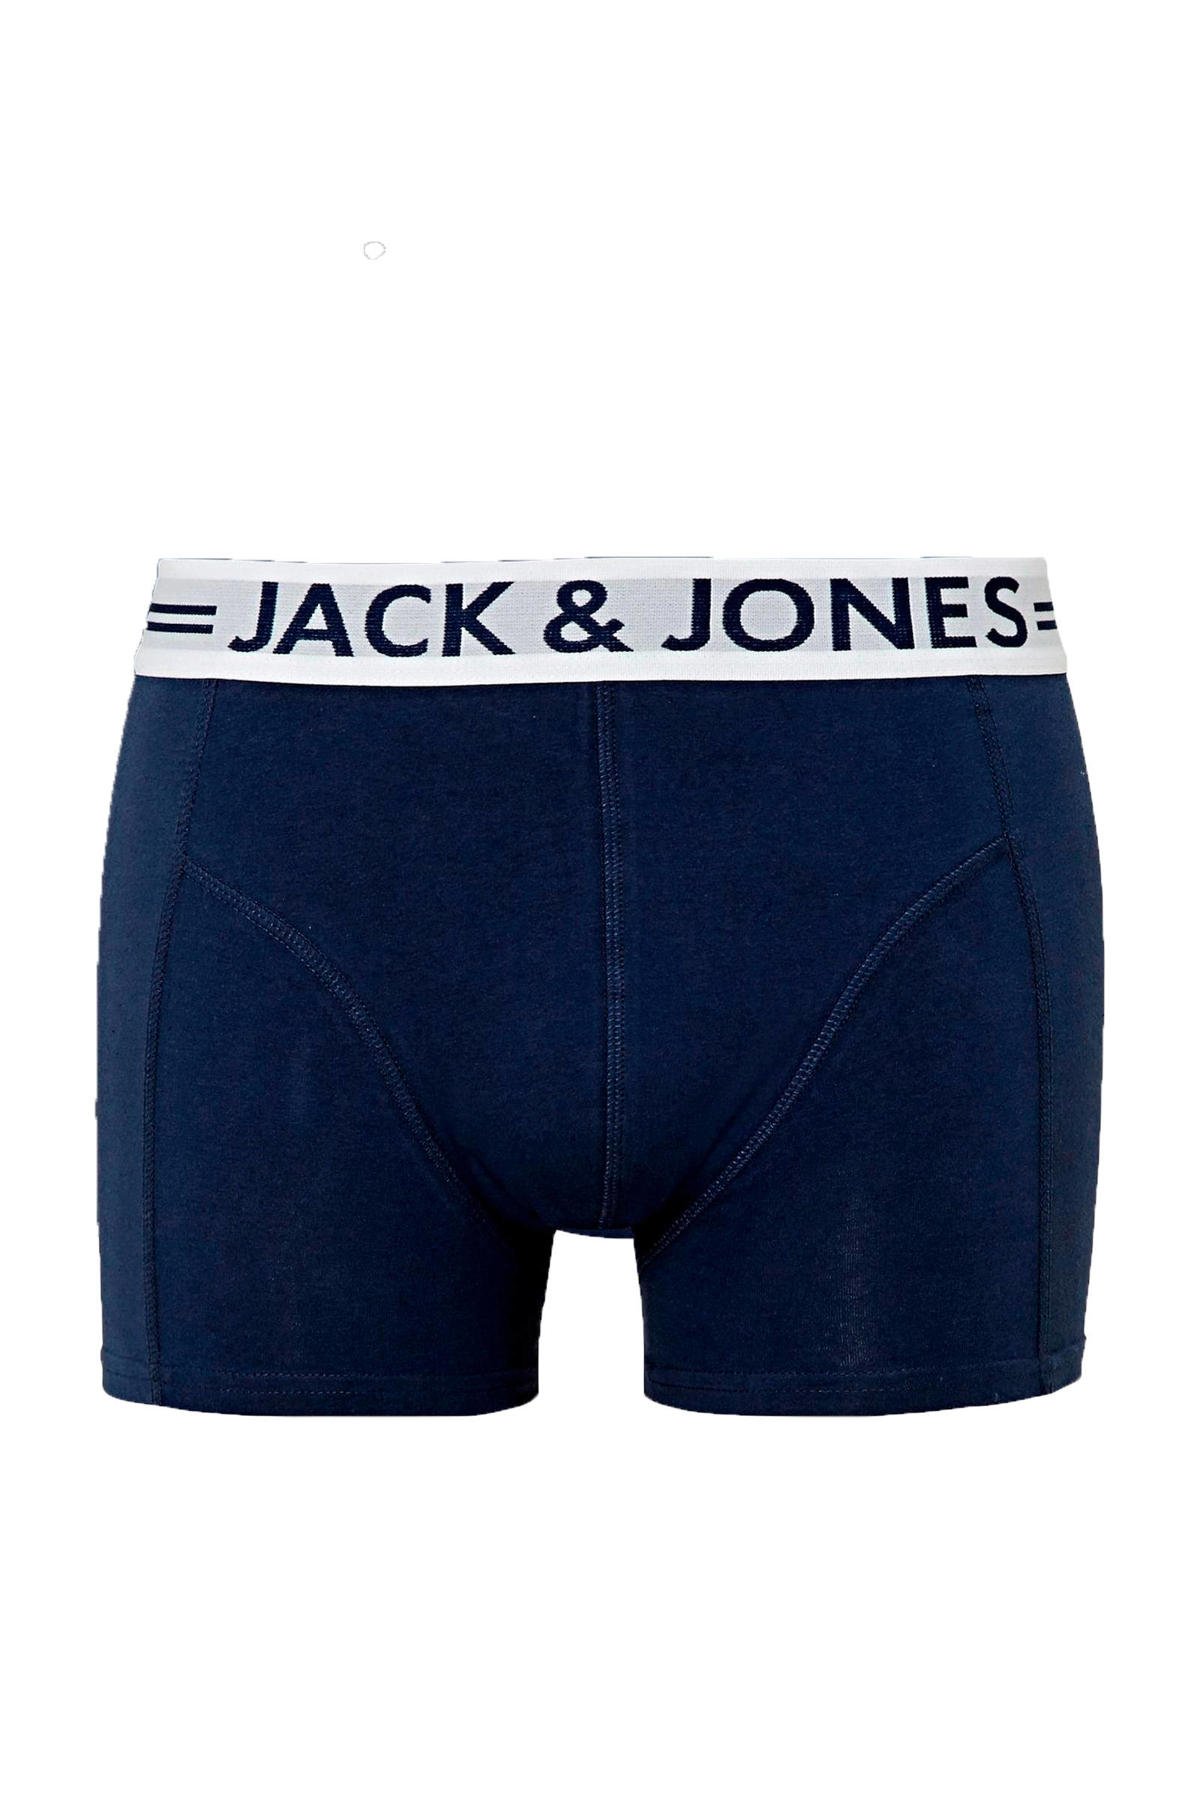 taart hardop donker JACK & JONES boxershort JACSENSE donkerblauw | wehkamp